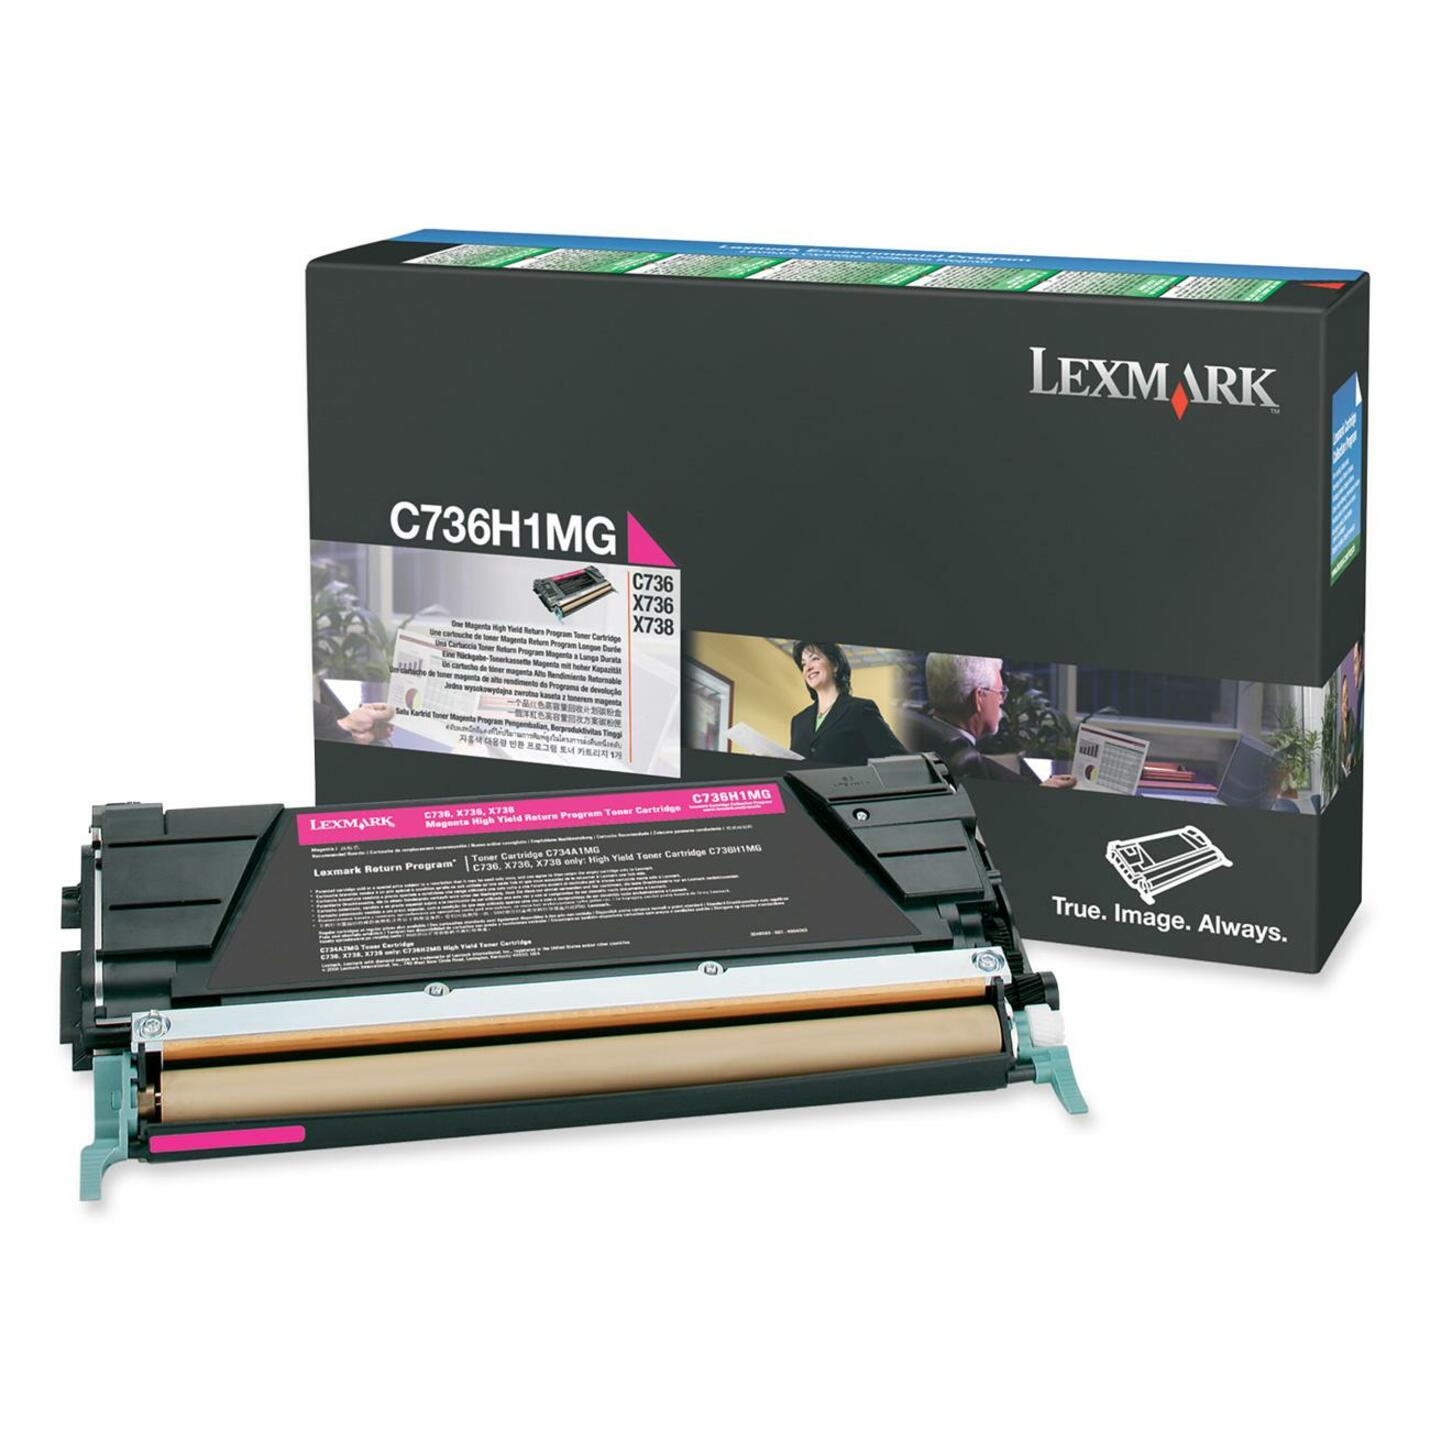 Lexmark C736H1MG Toner Cartridge, Magenta, 10000 Page Yield